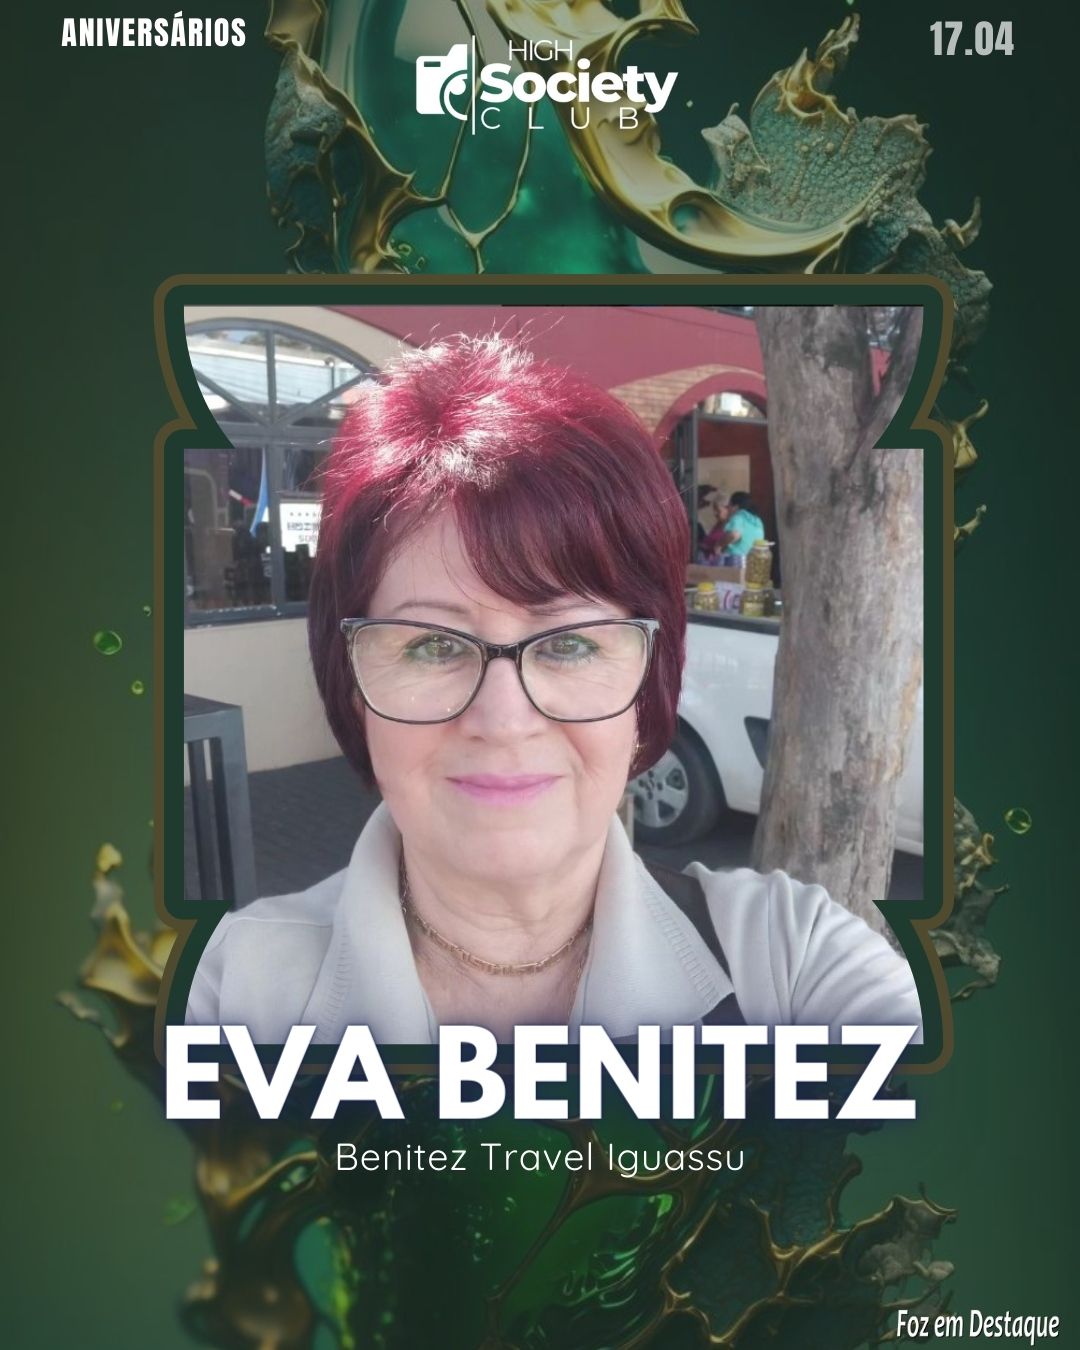 Eva Benitez - Benitez Travel Iguassu 
High Society Club Foz em Destaque